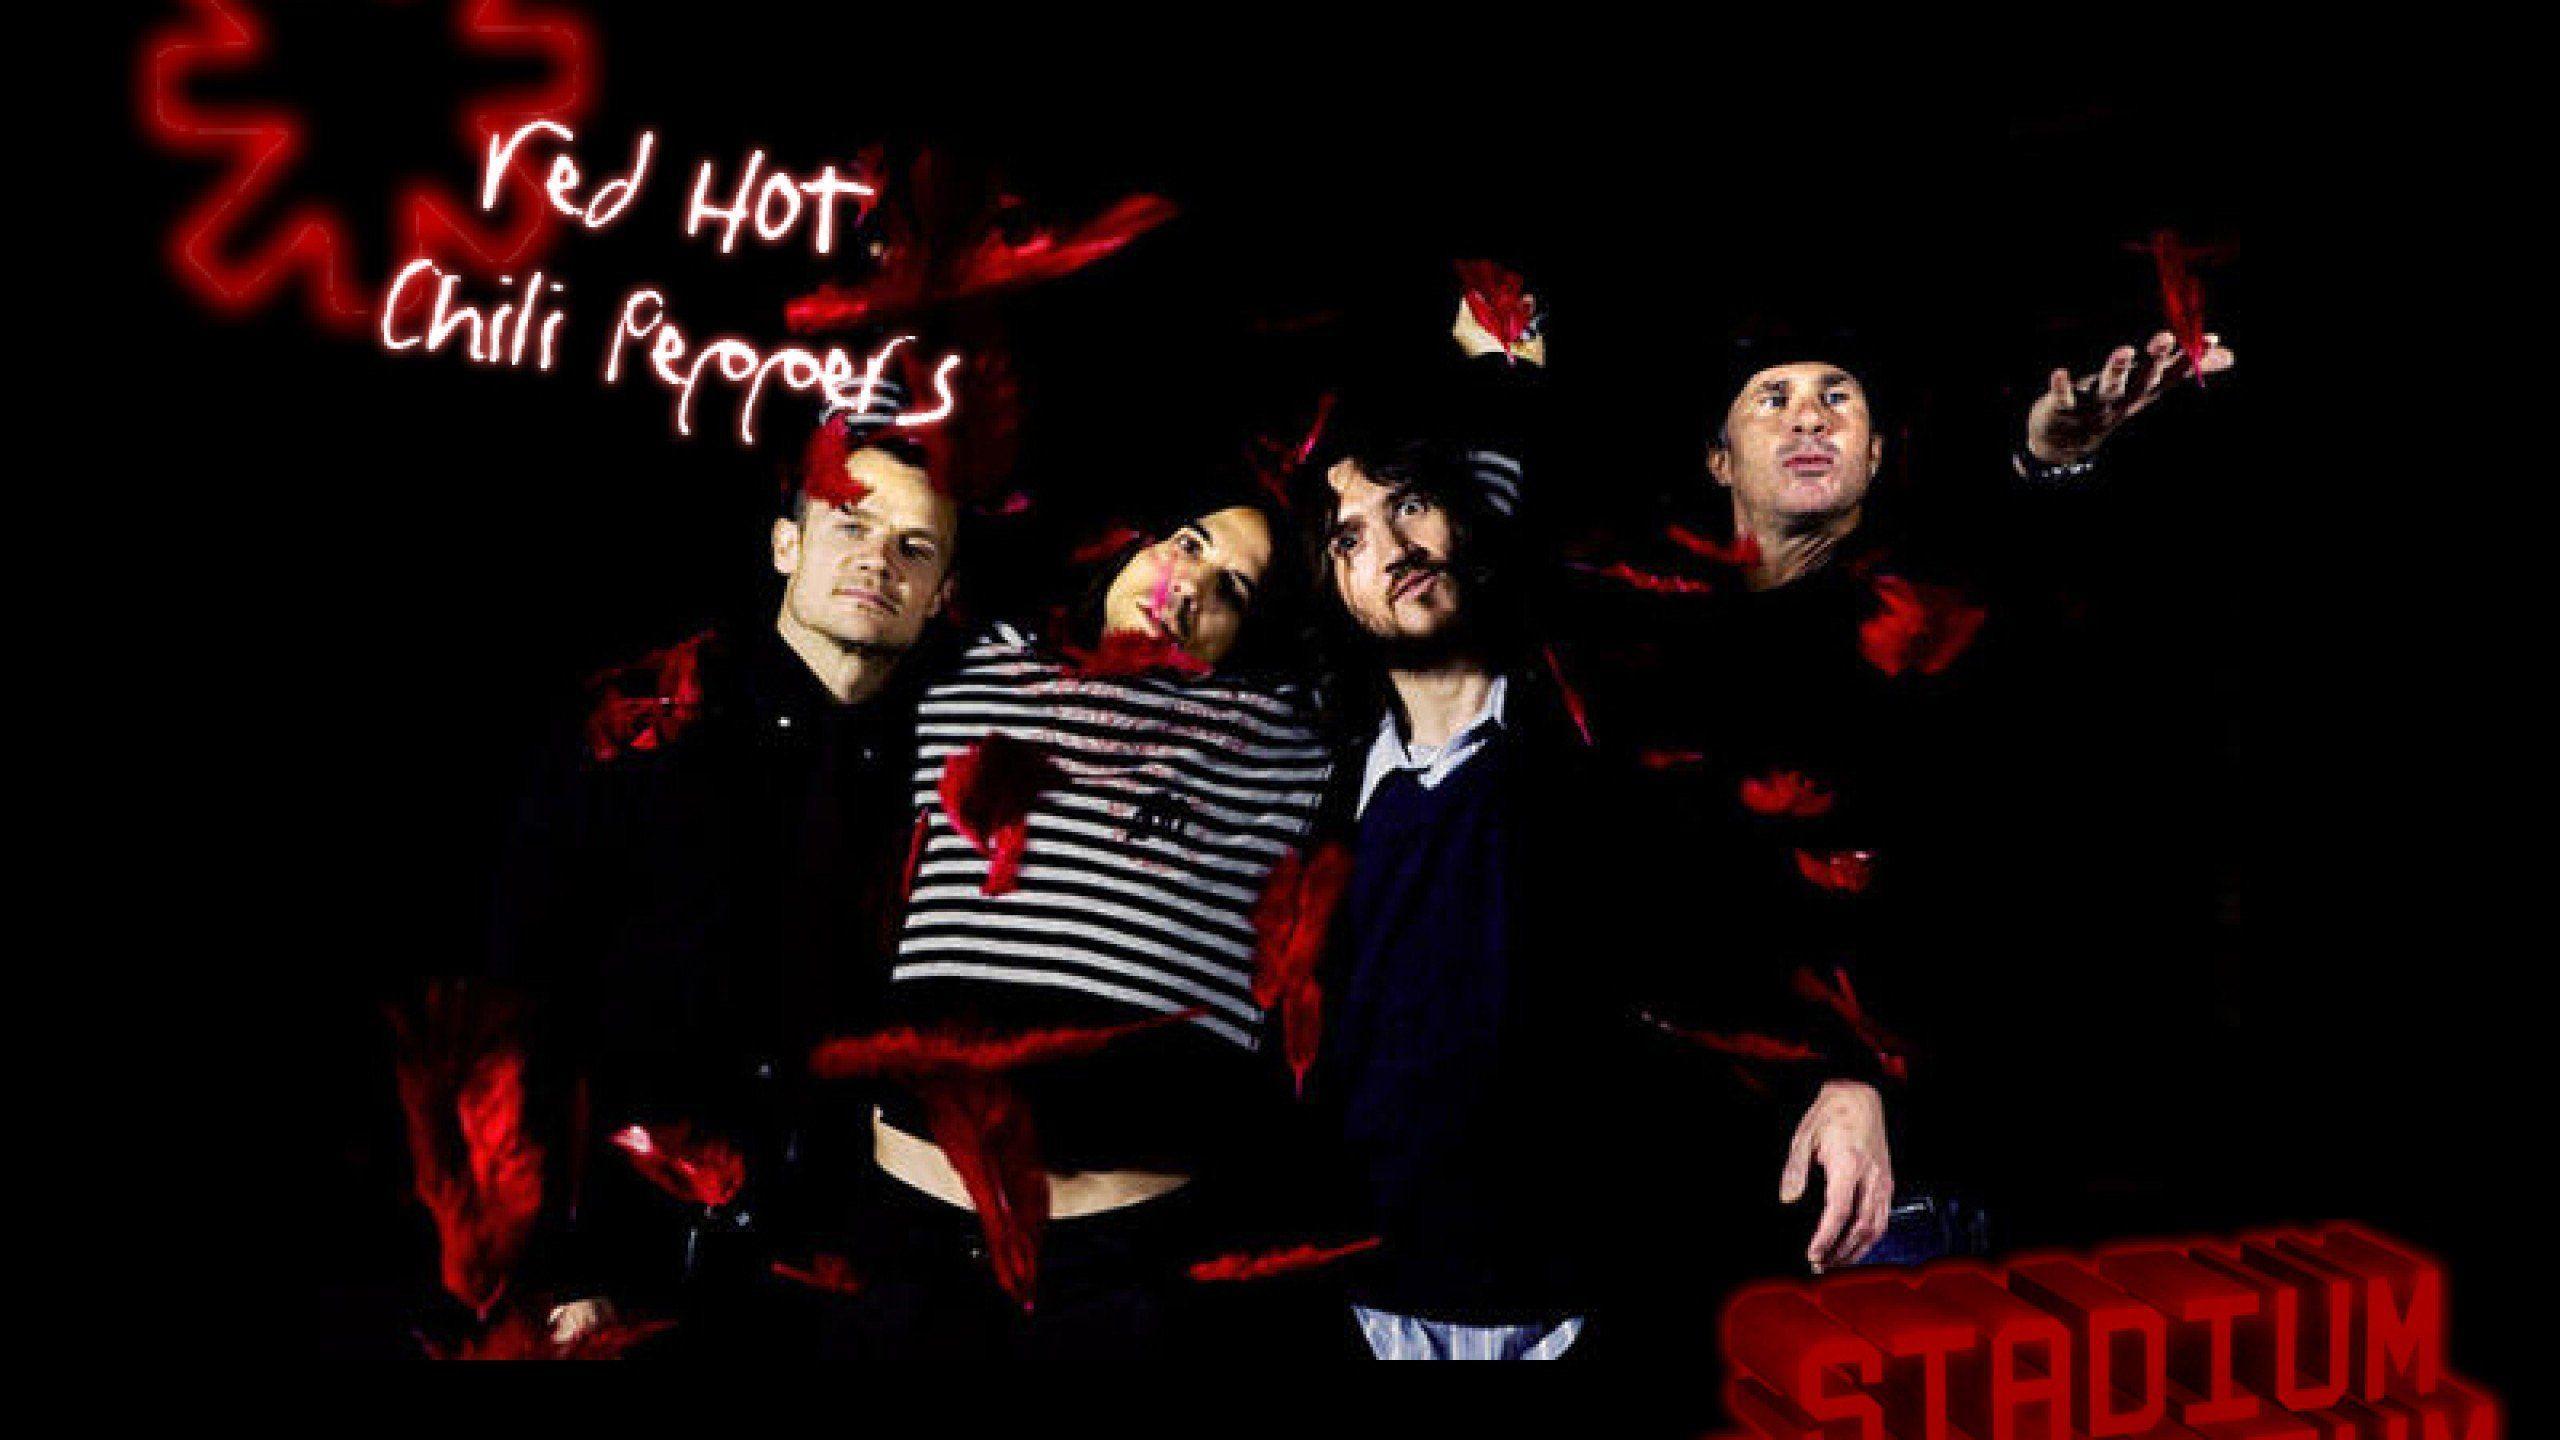 RED HOT CHILI PEPPERS funk rock alternative (50) wallpaper